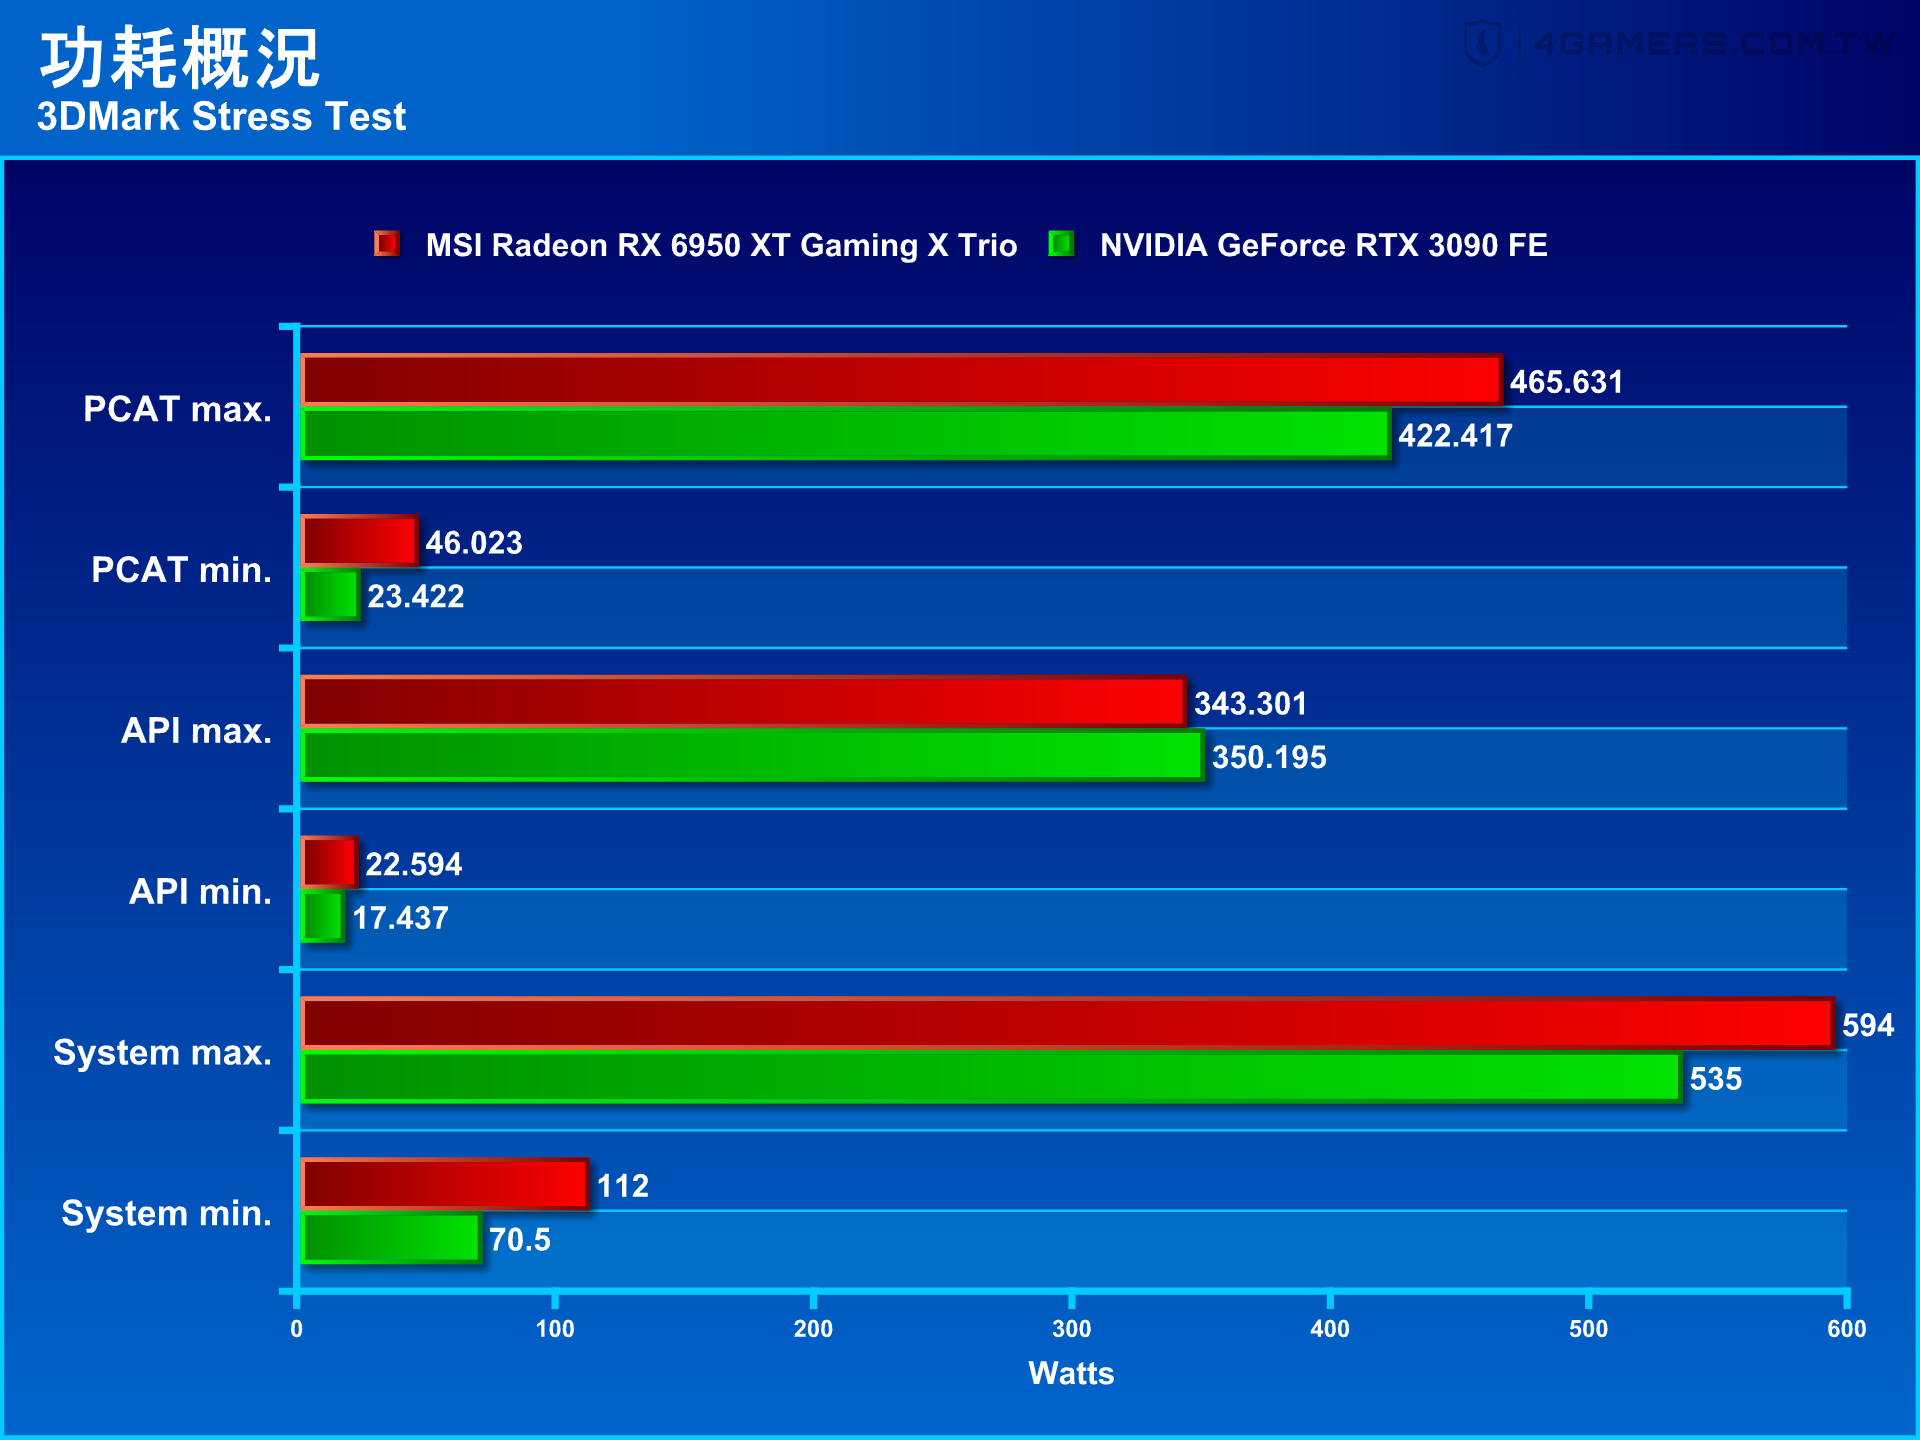 MSI Radeon RX 6950 XT Gaming X Trio